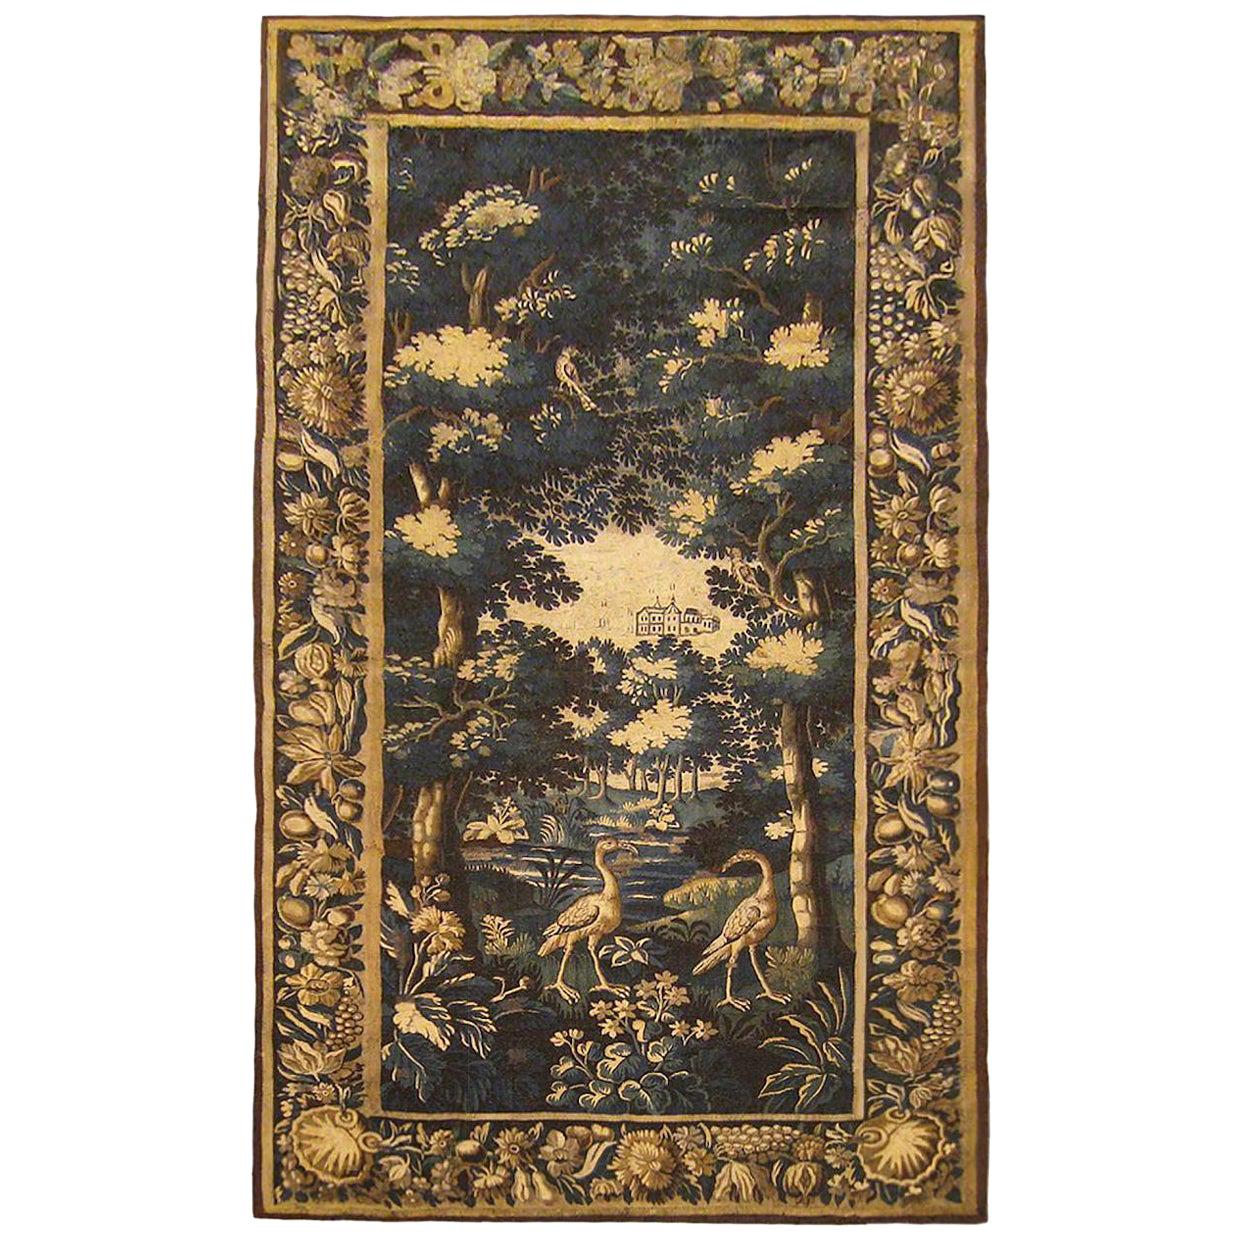 Late 17th Century Flemish Verdure Landscape Tapestry